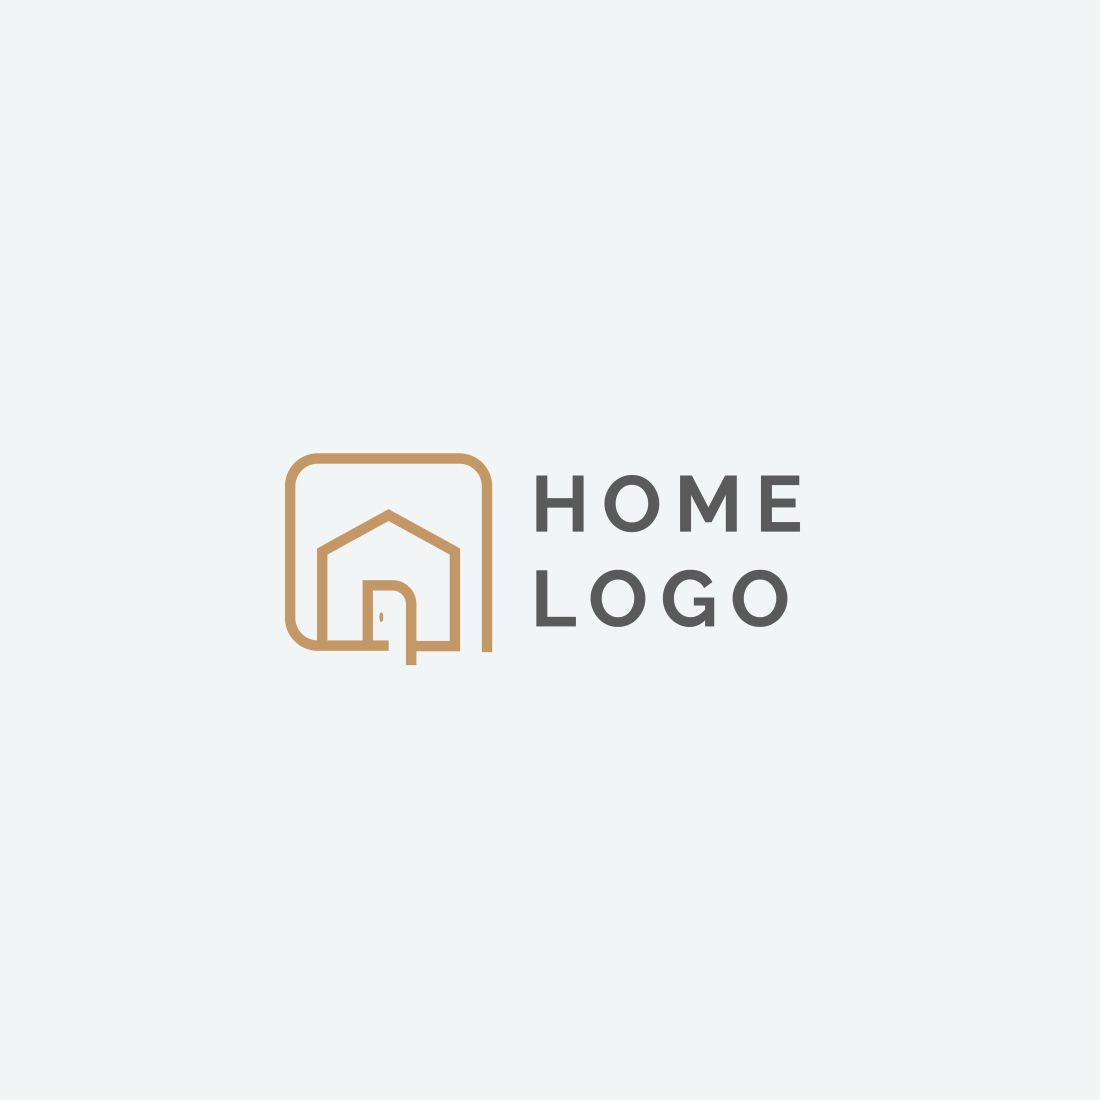 Creative Home Logo preview image.